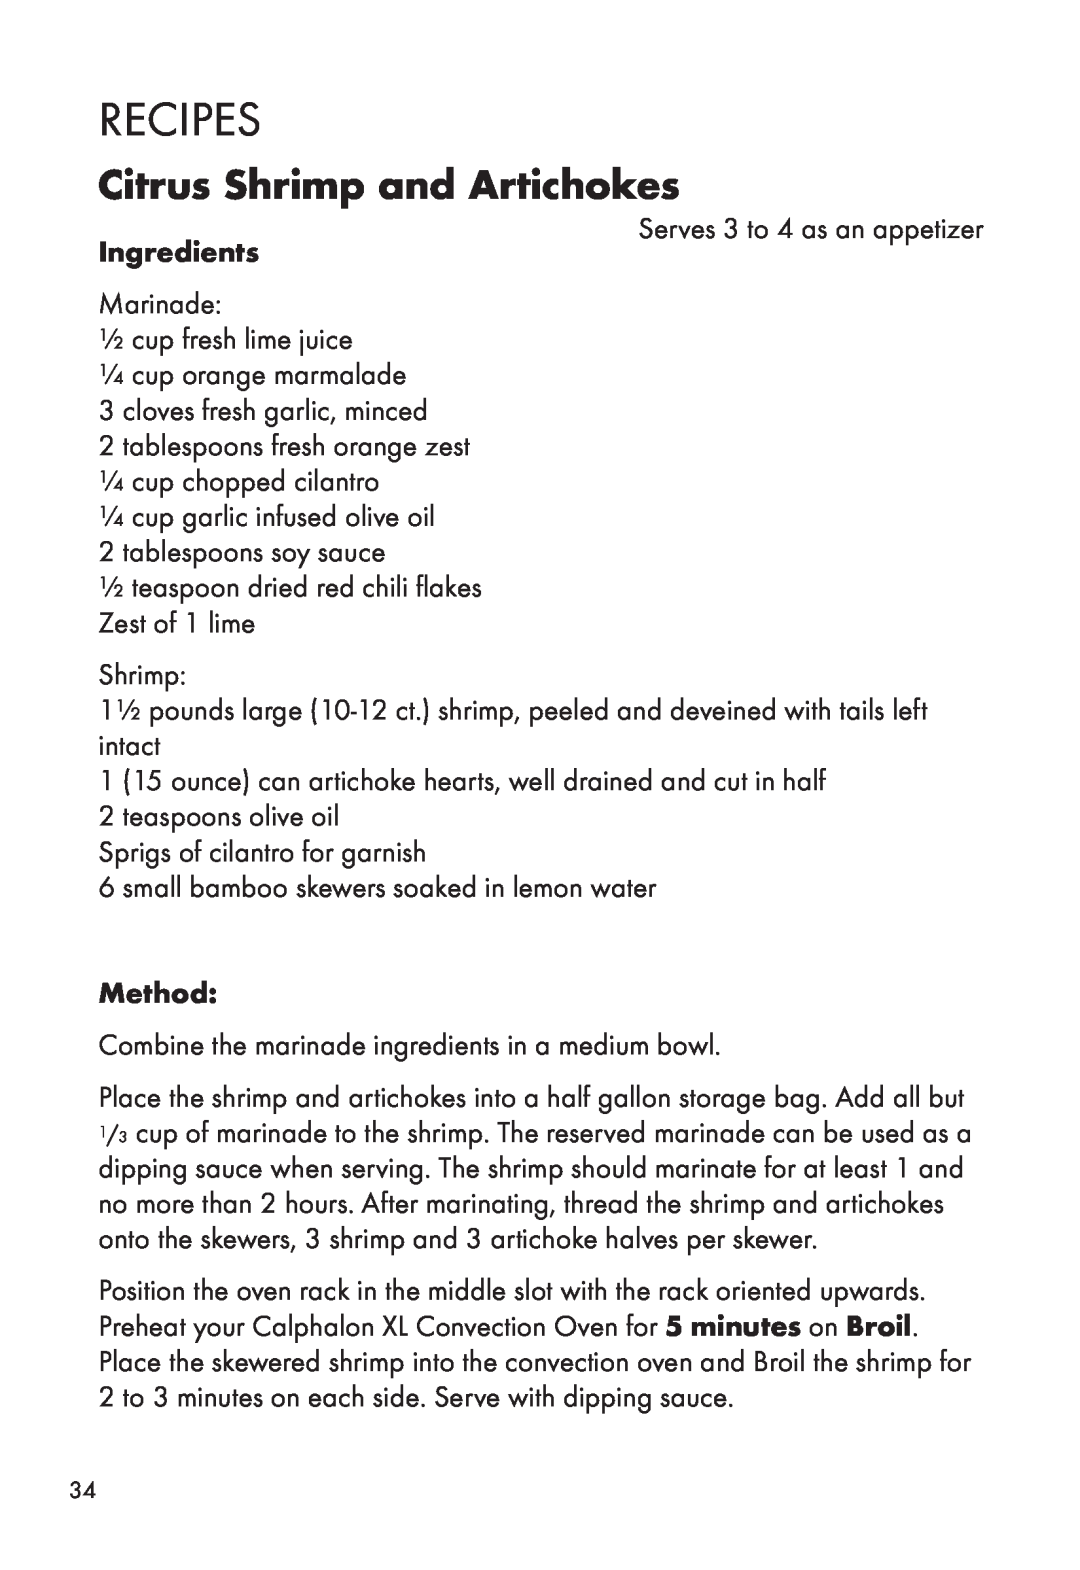 Calphalon HE700CO manual Recipes, Citrus Shrimp and Artichokes, Ingredients, Method 